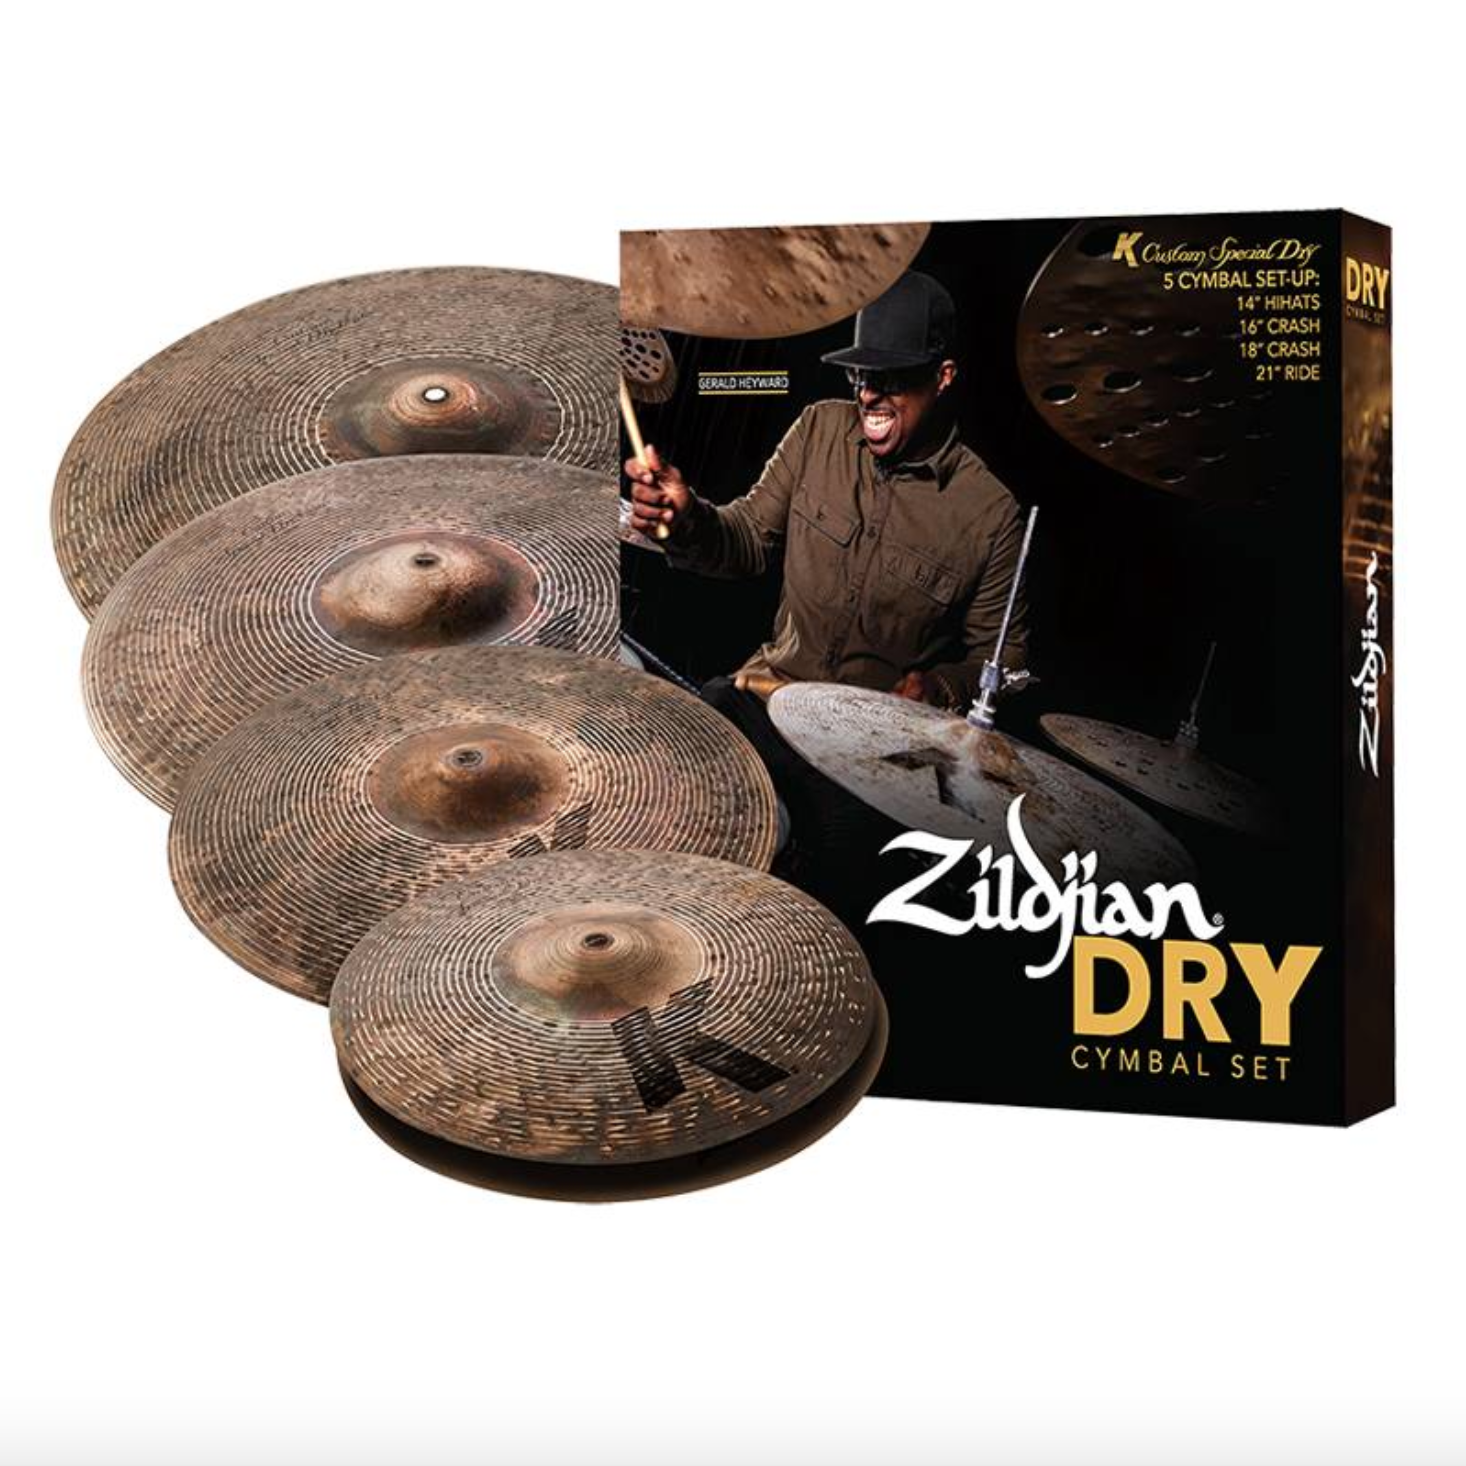 K Custom Special Dry Cymbal Set